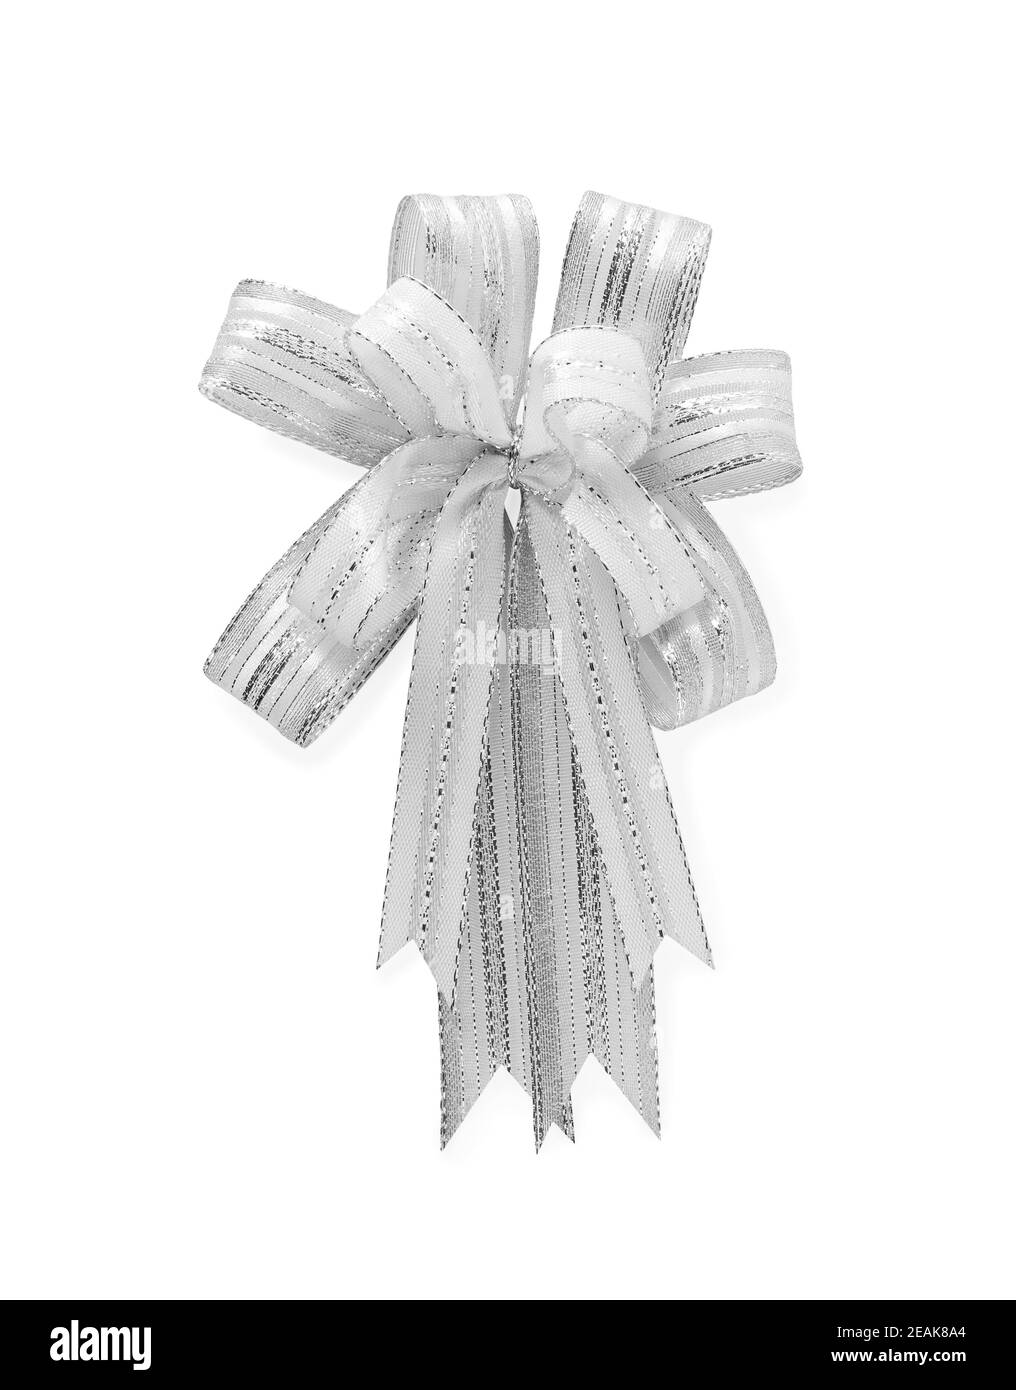 Shiny silver tied festive bow ribbon on white background. Stock Photo